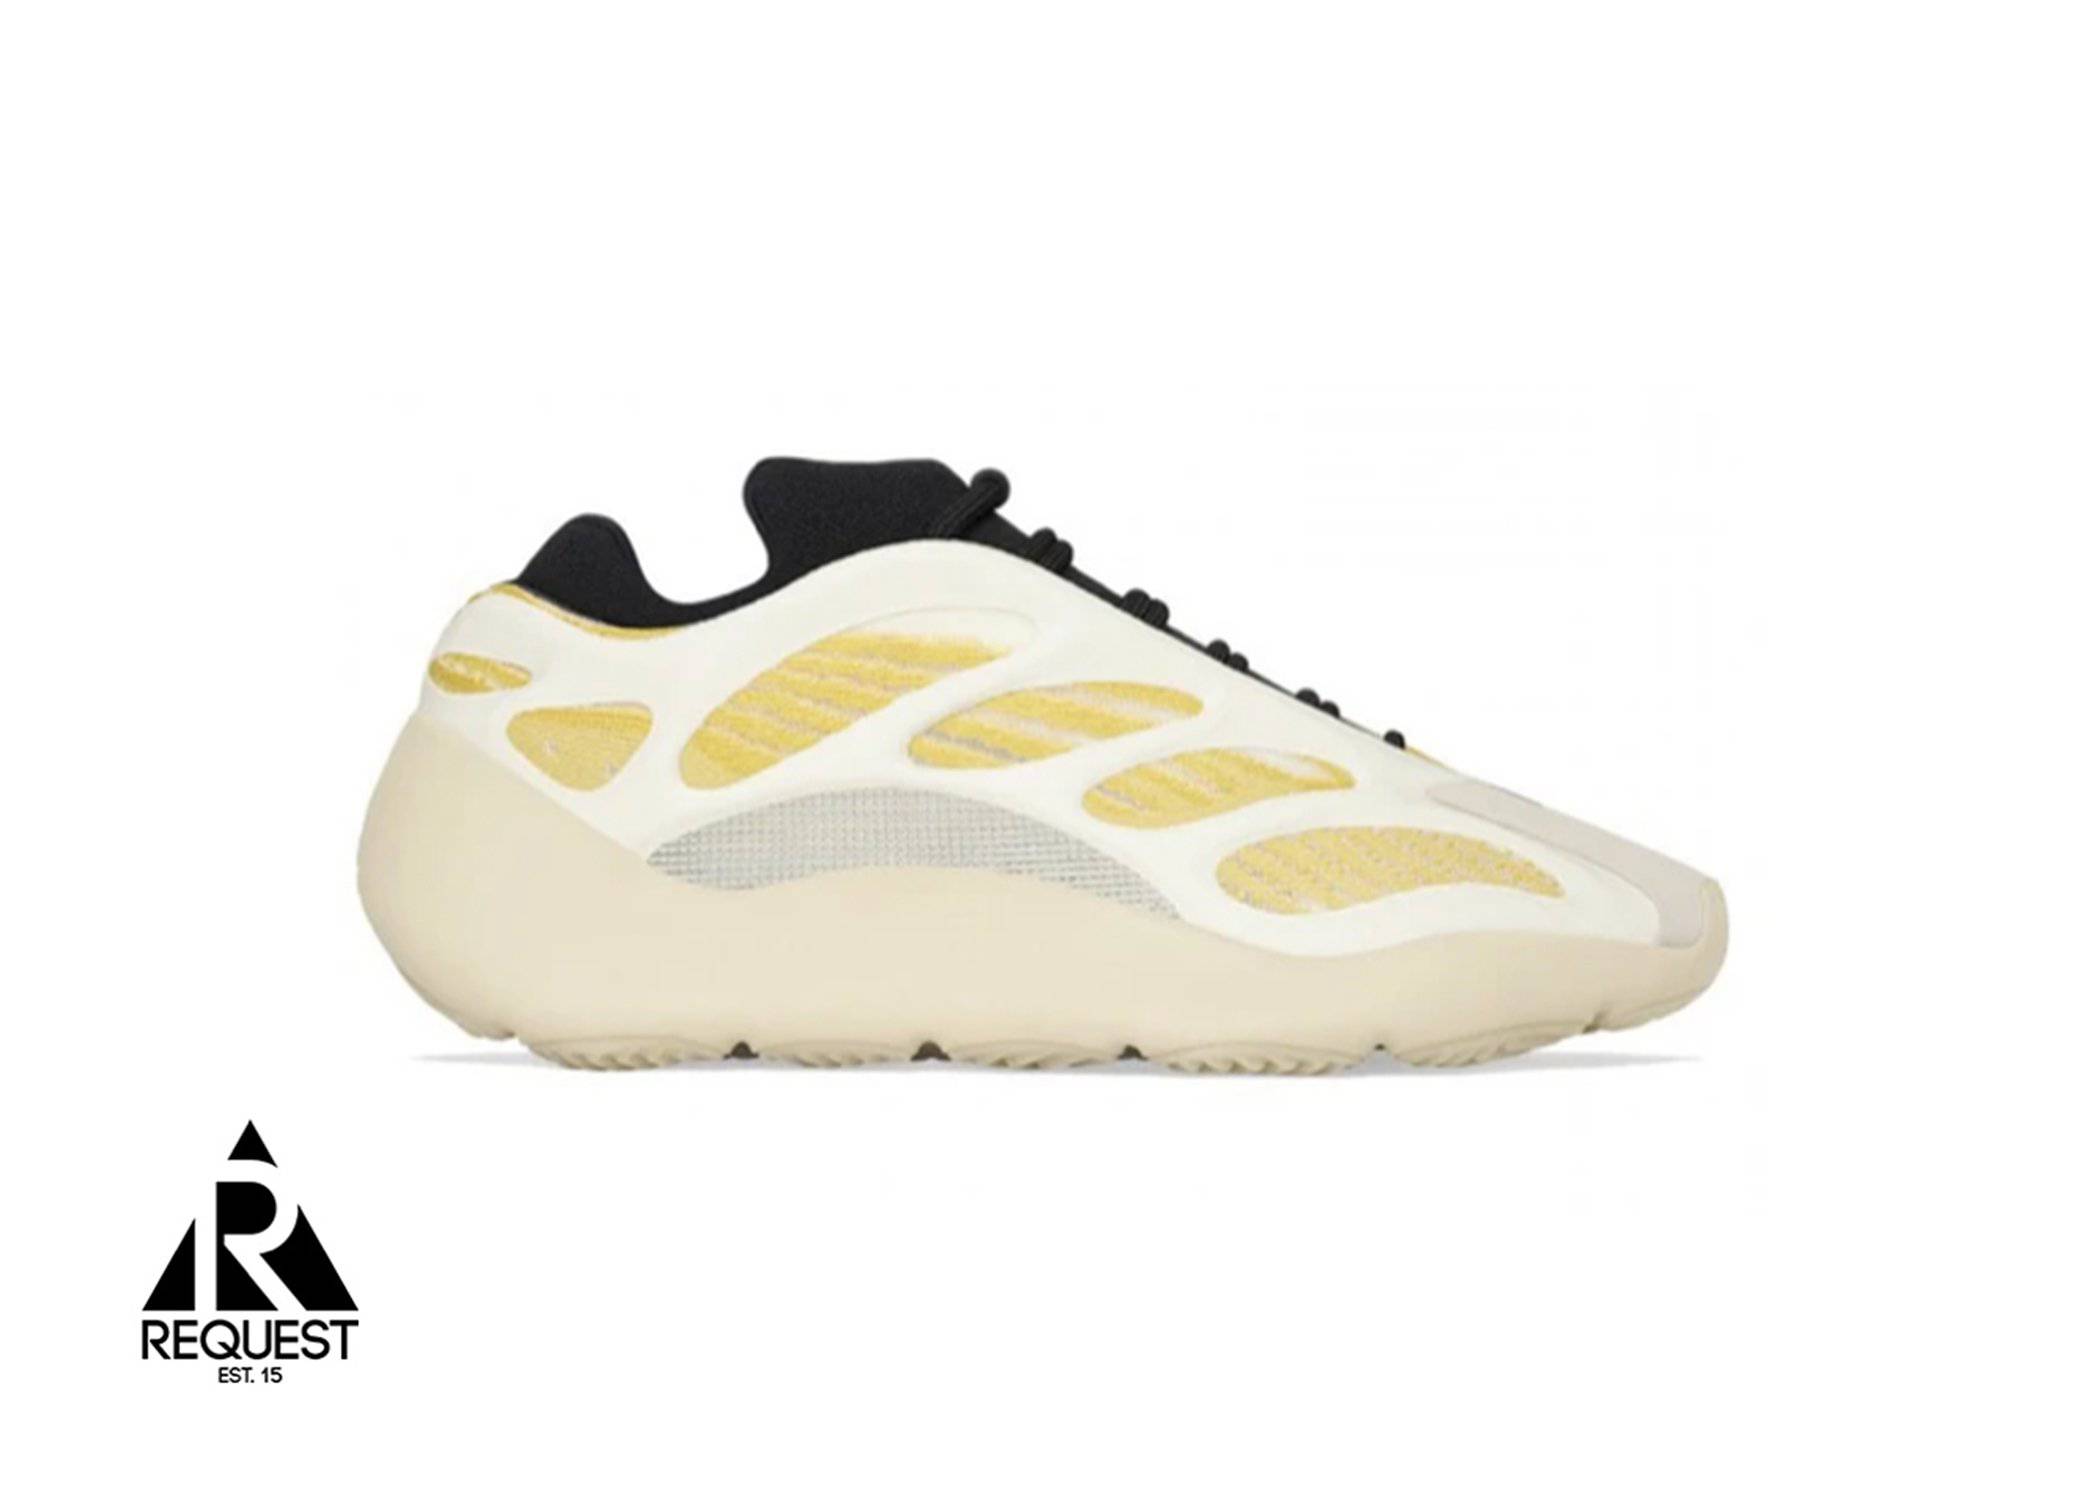 Adidas Yeezy 700 V3 “Safflower”